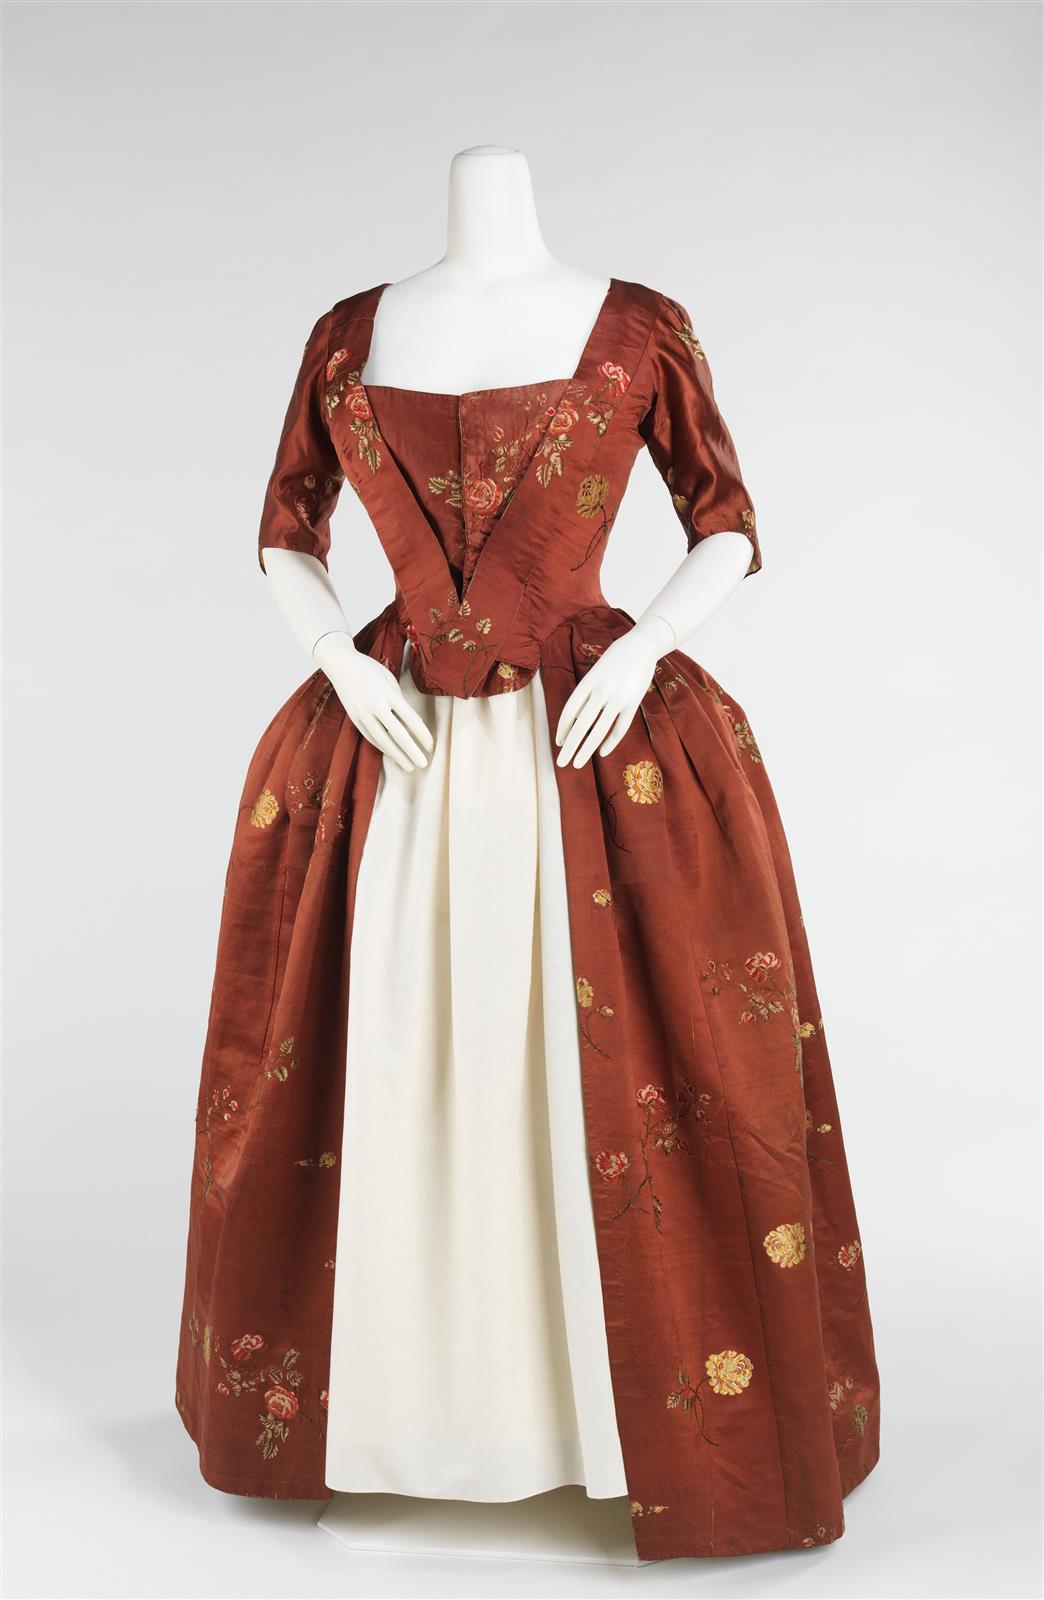 1750. Robe à l'Anglaise. British. Silk.